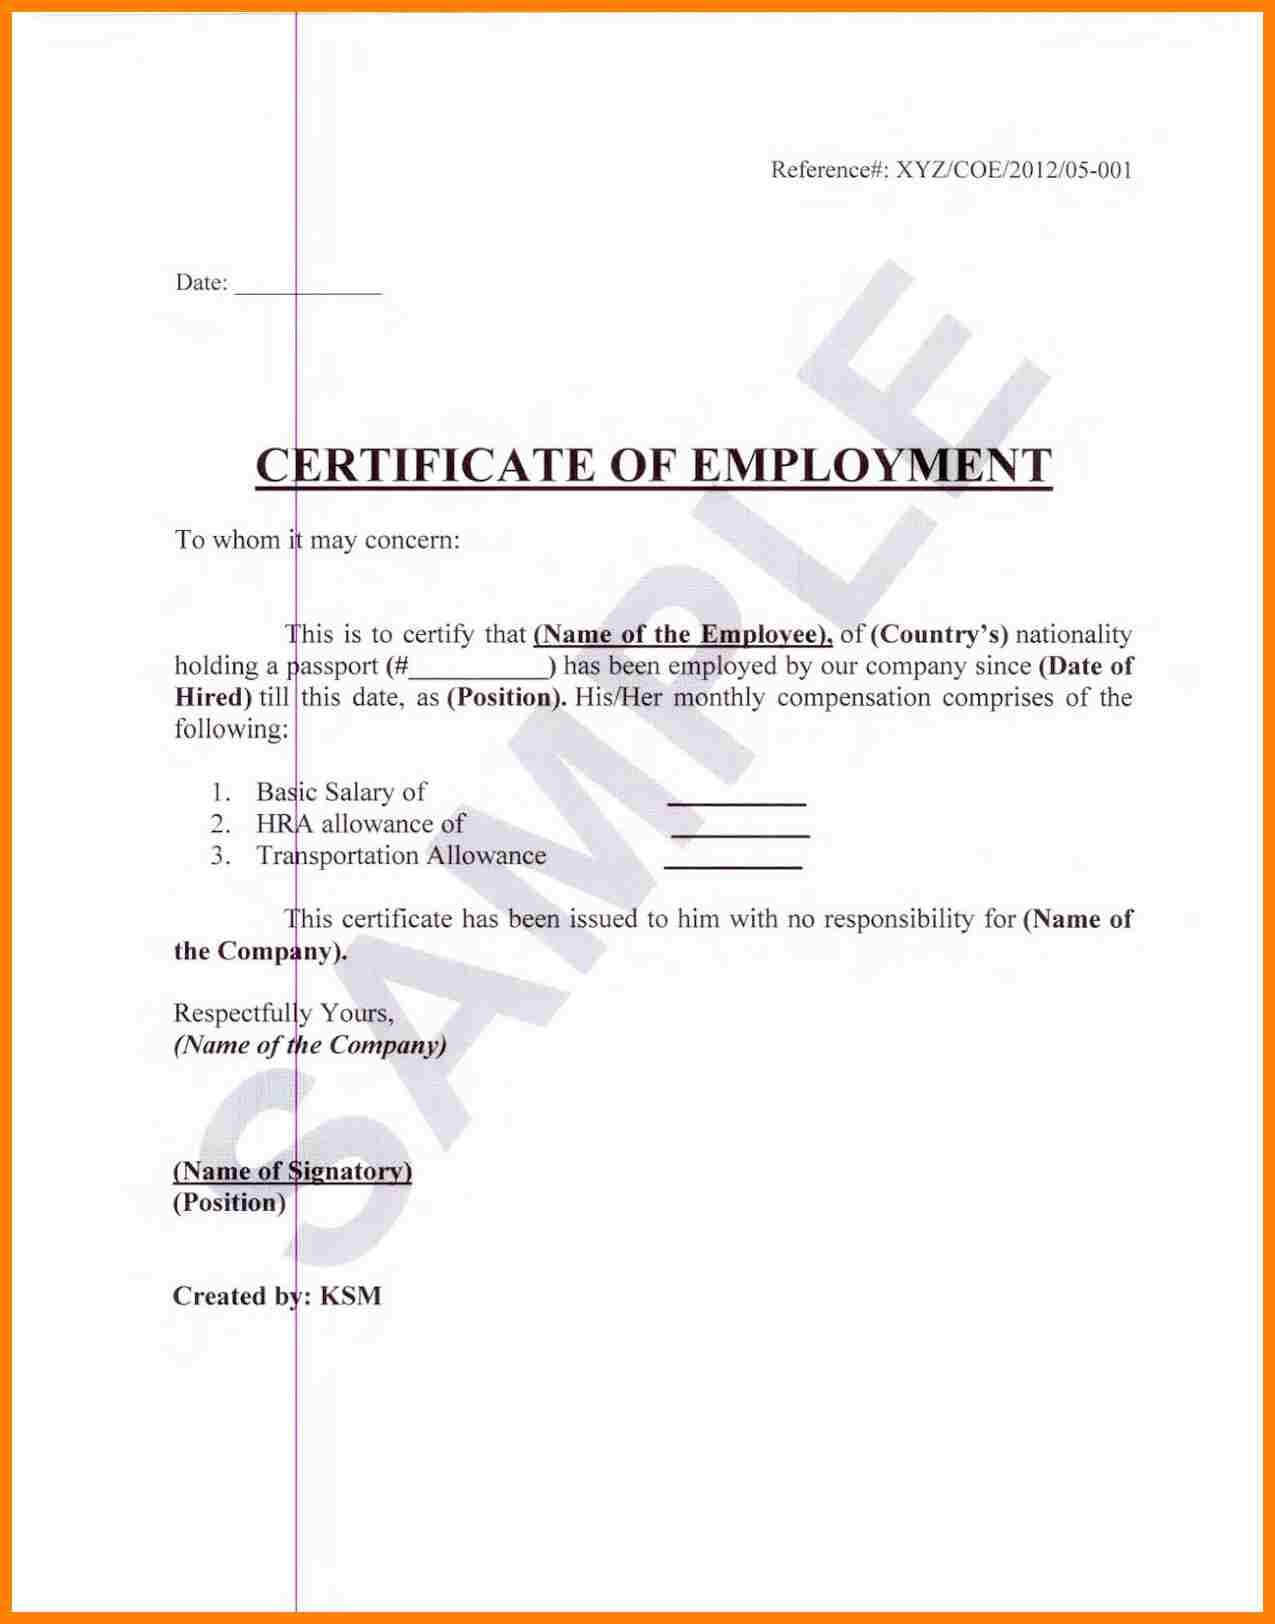 Sample Certification Employment Certificate Tugon Med Clinic With Sample Certificate Employment Template